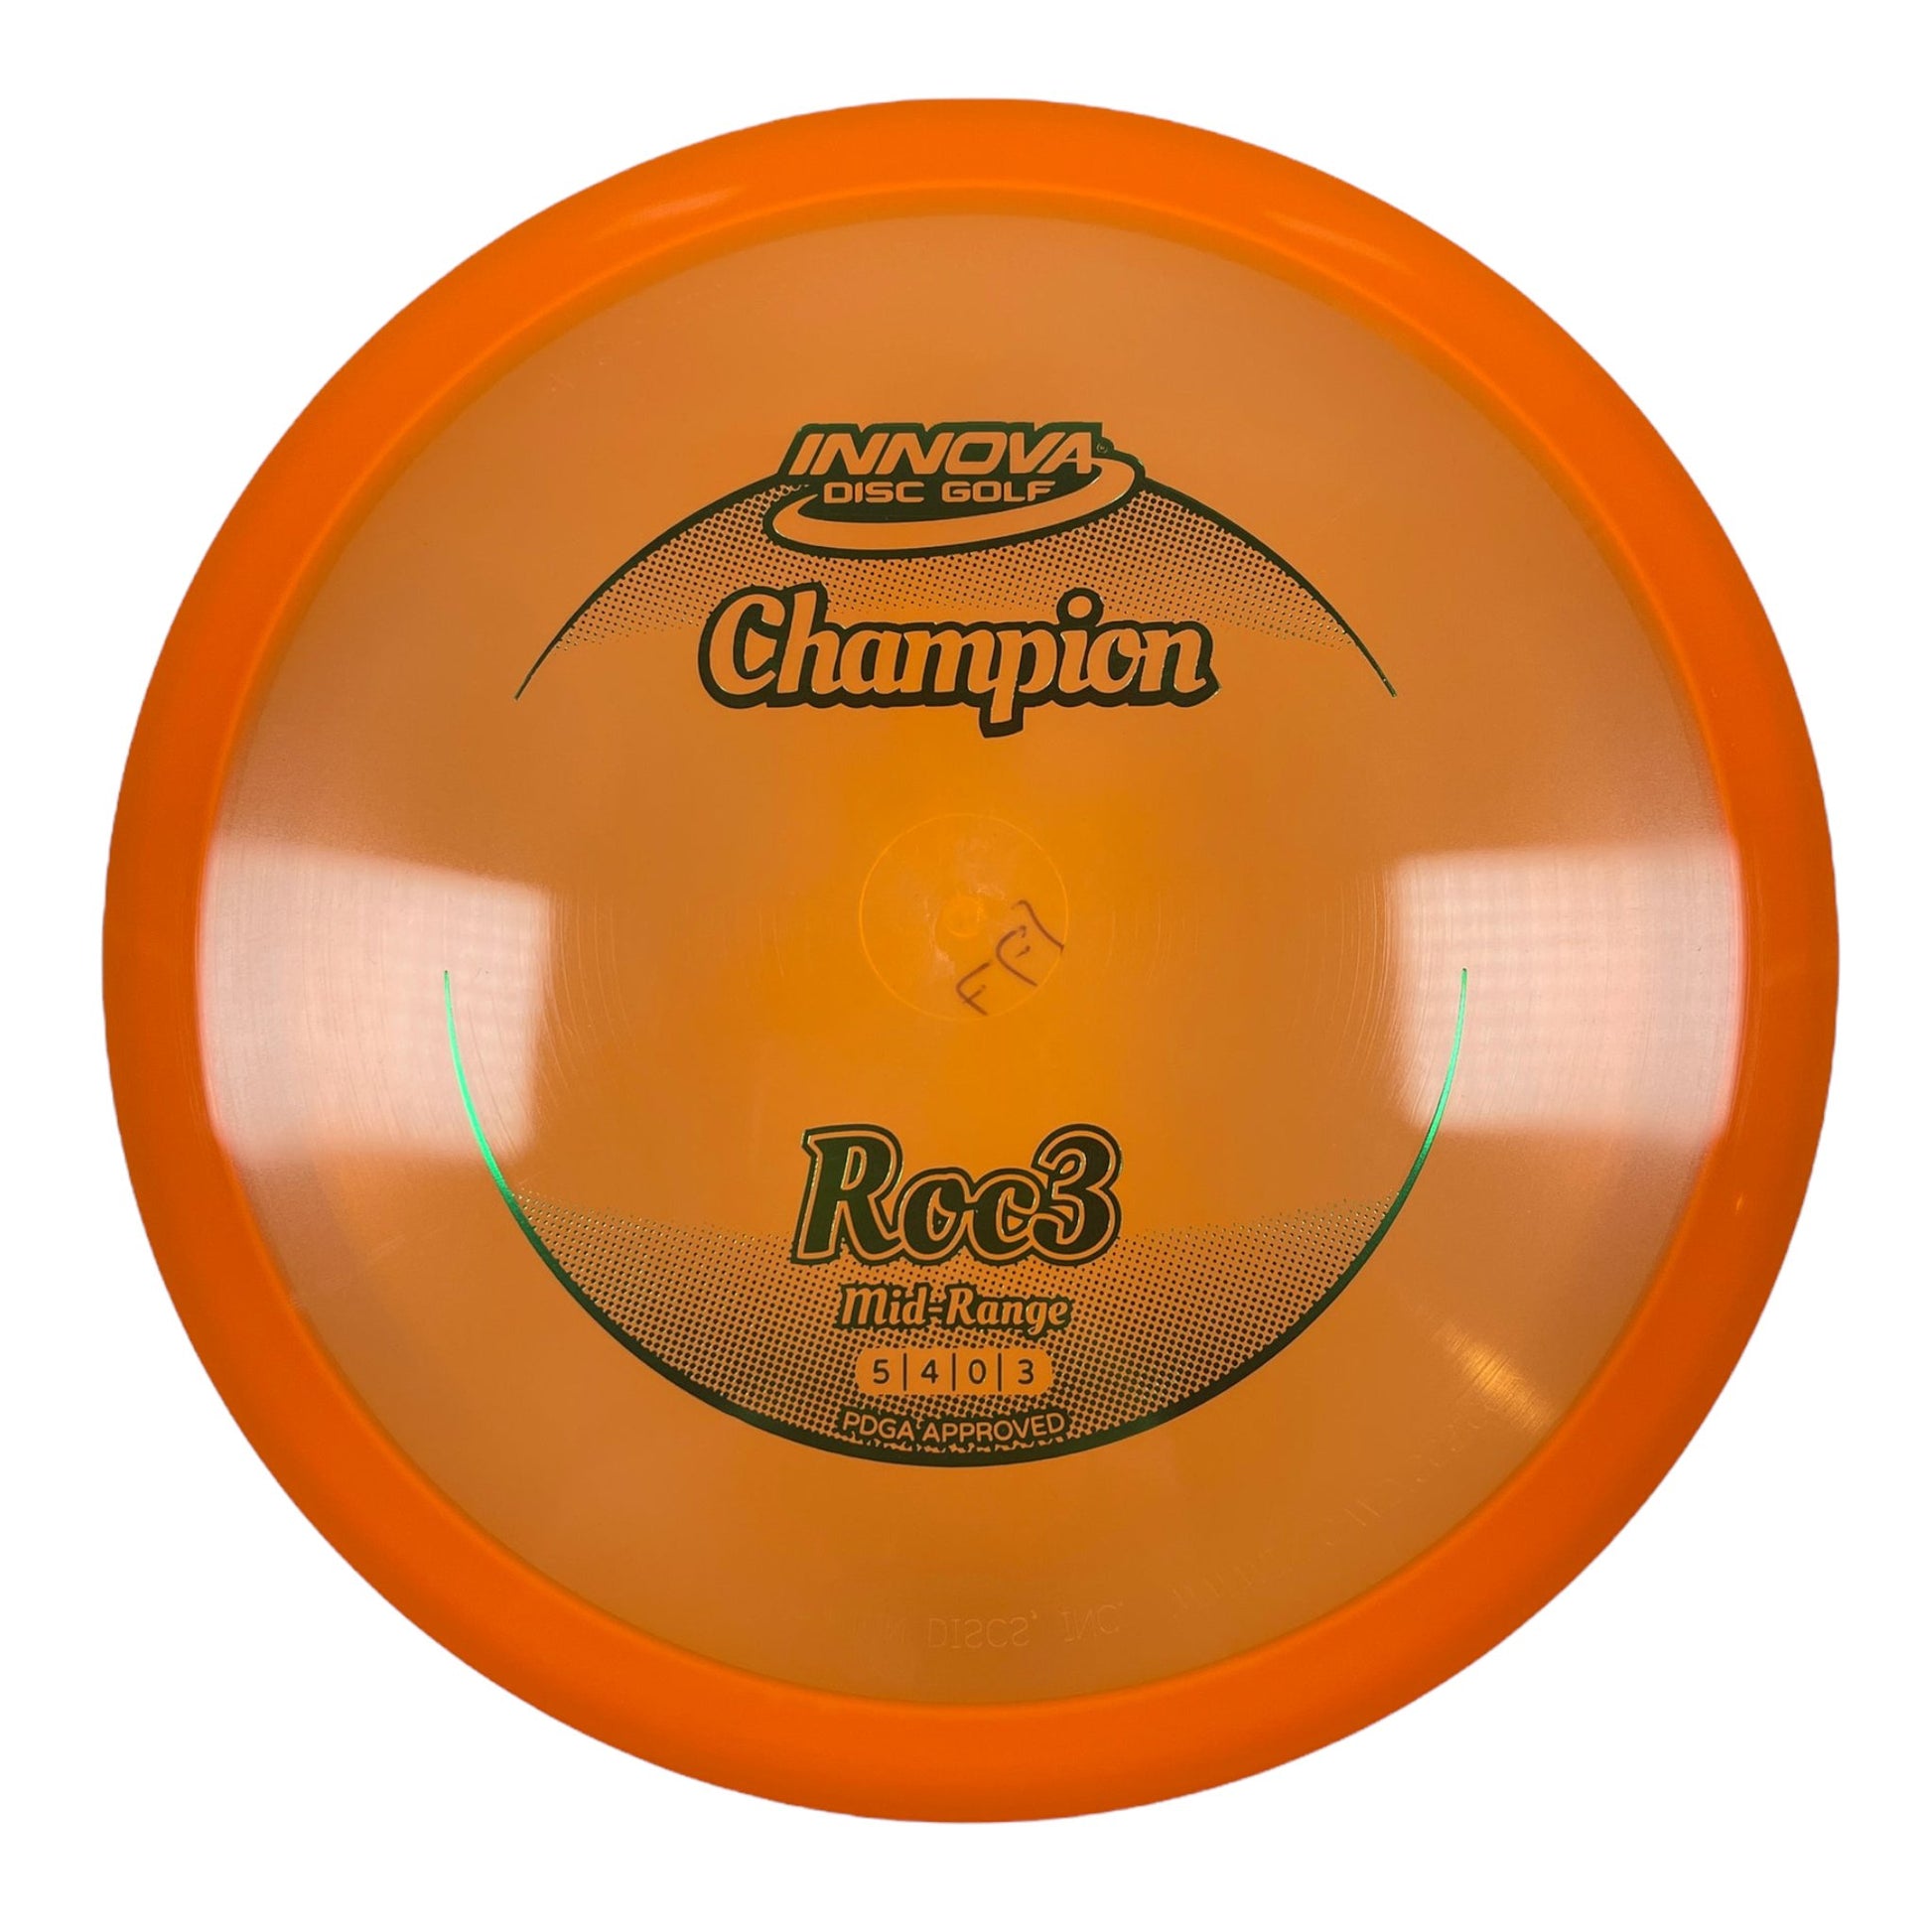 Innova Champion Discs Roc3 | Champion | Orange/Green 177g Disc Golf